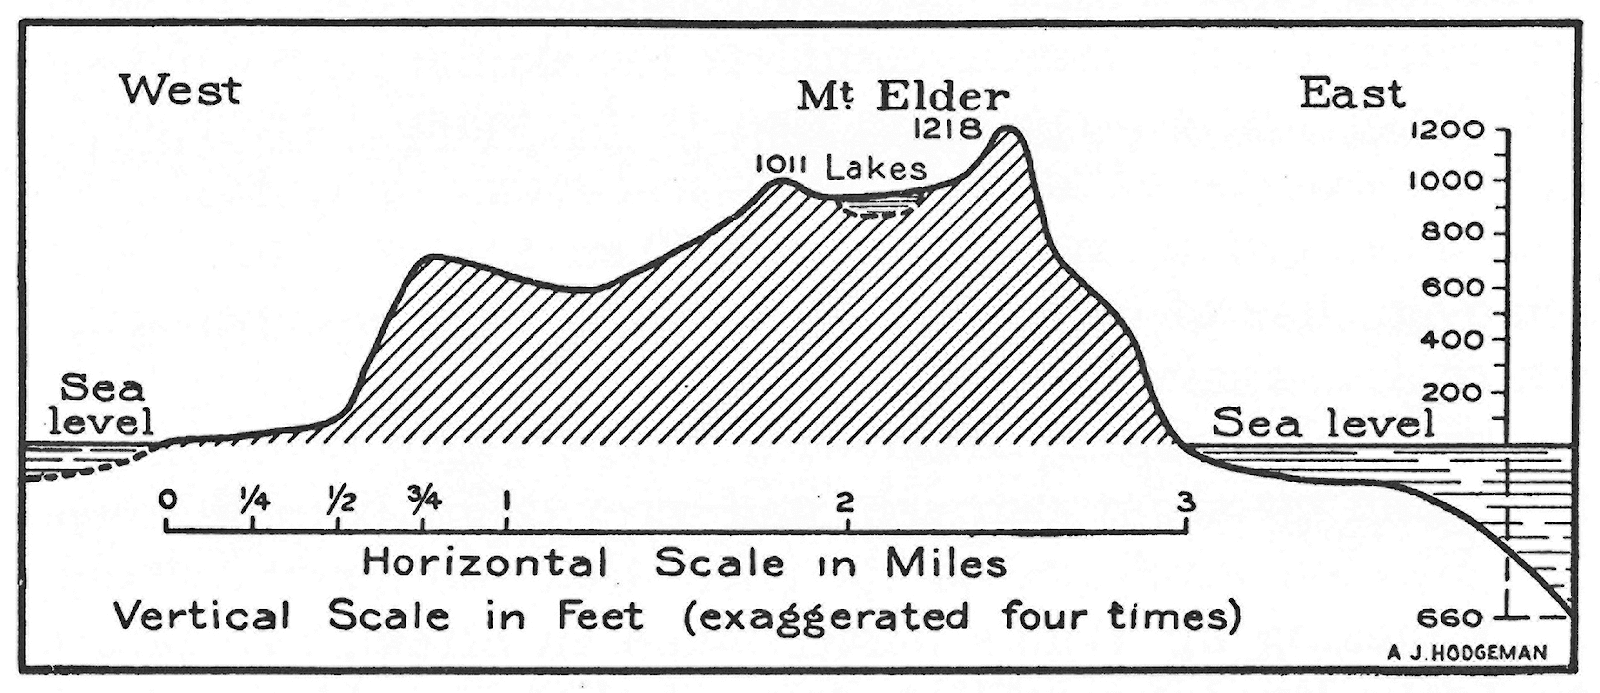 A section diagram across Macquarie Island through Mt Elder.